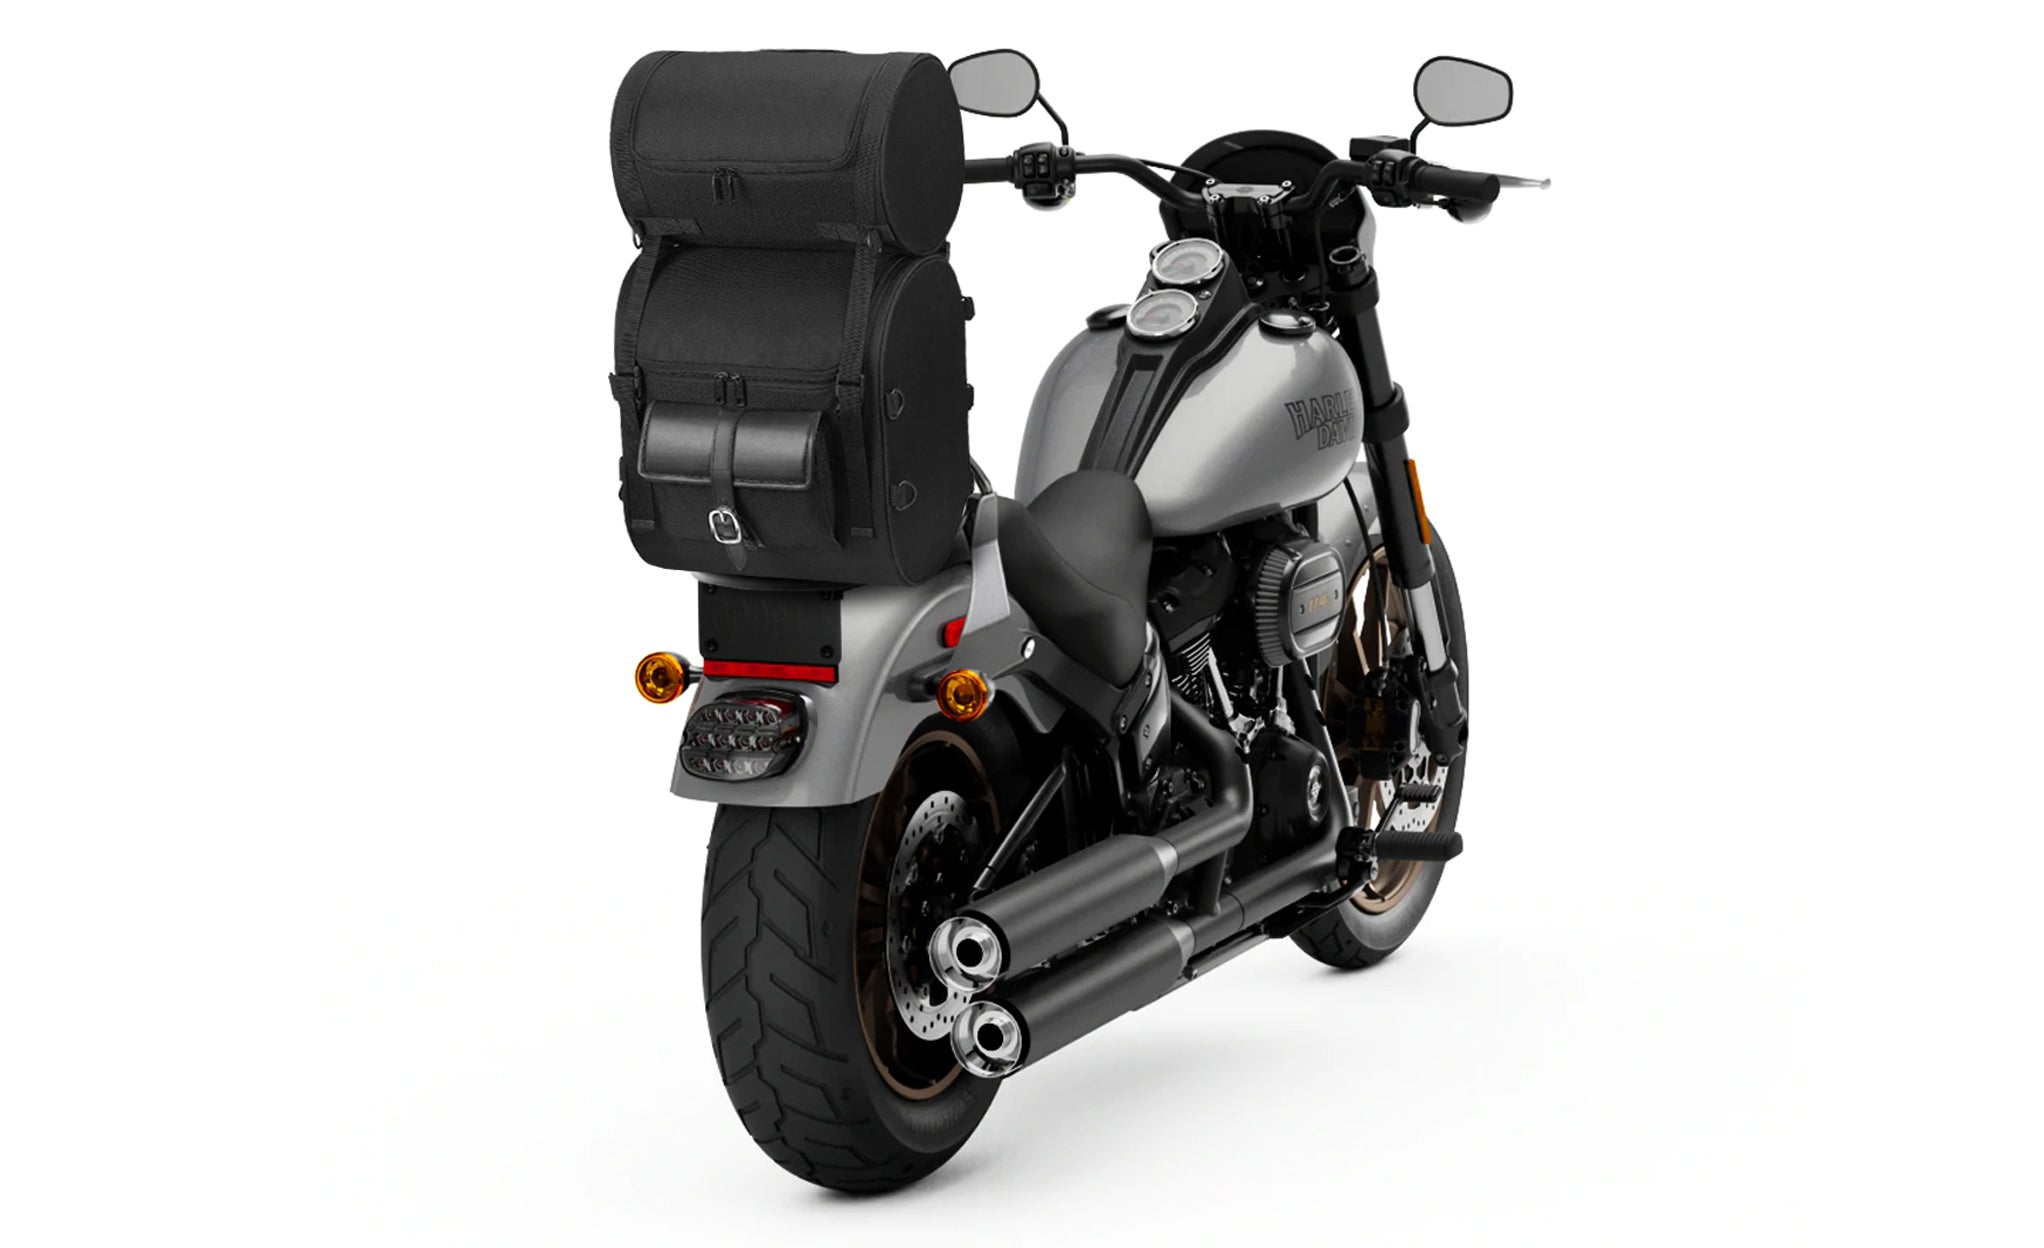 Viking Economy Line Medium Motorcycle Sissy Bar Bag for Harley Davidson Bag on Bike View @expand